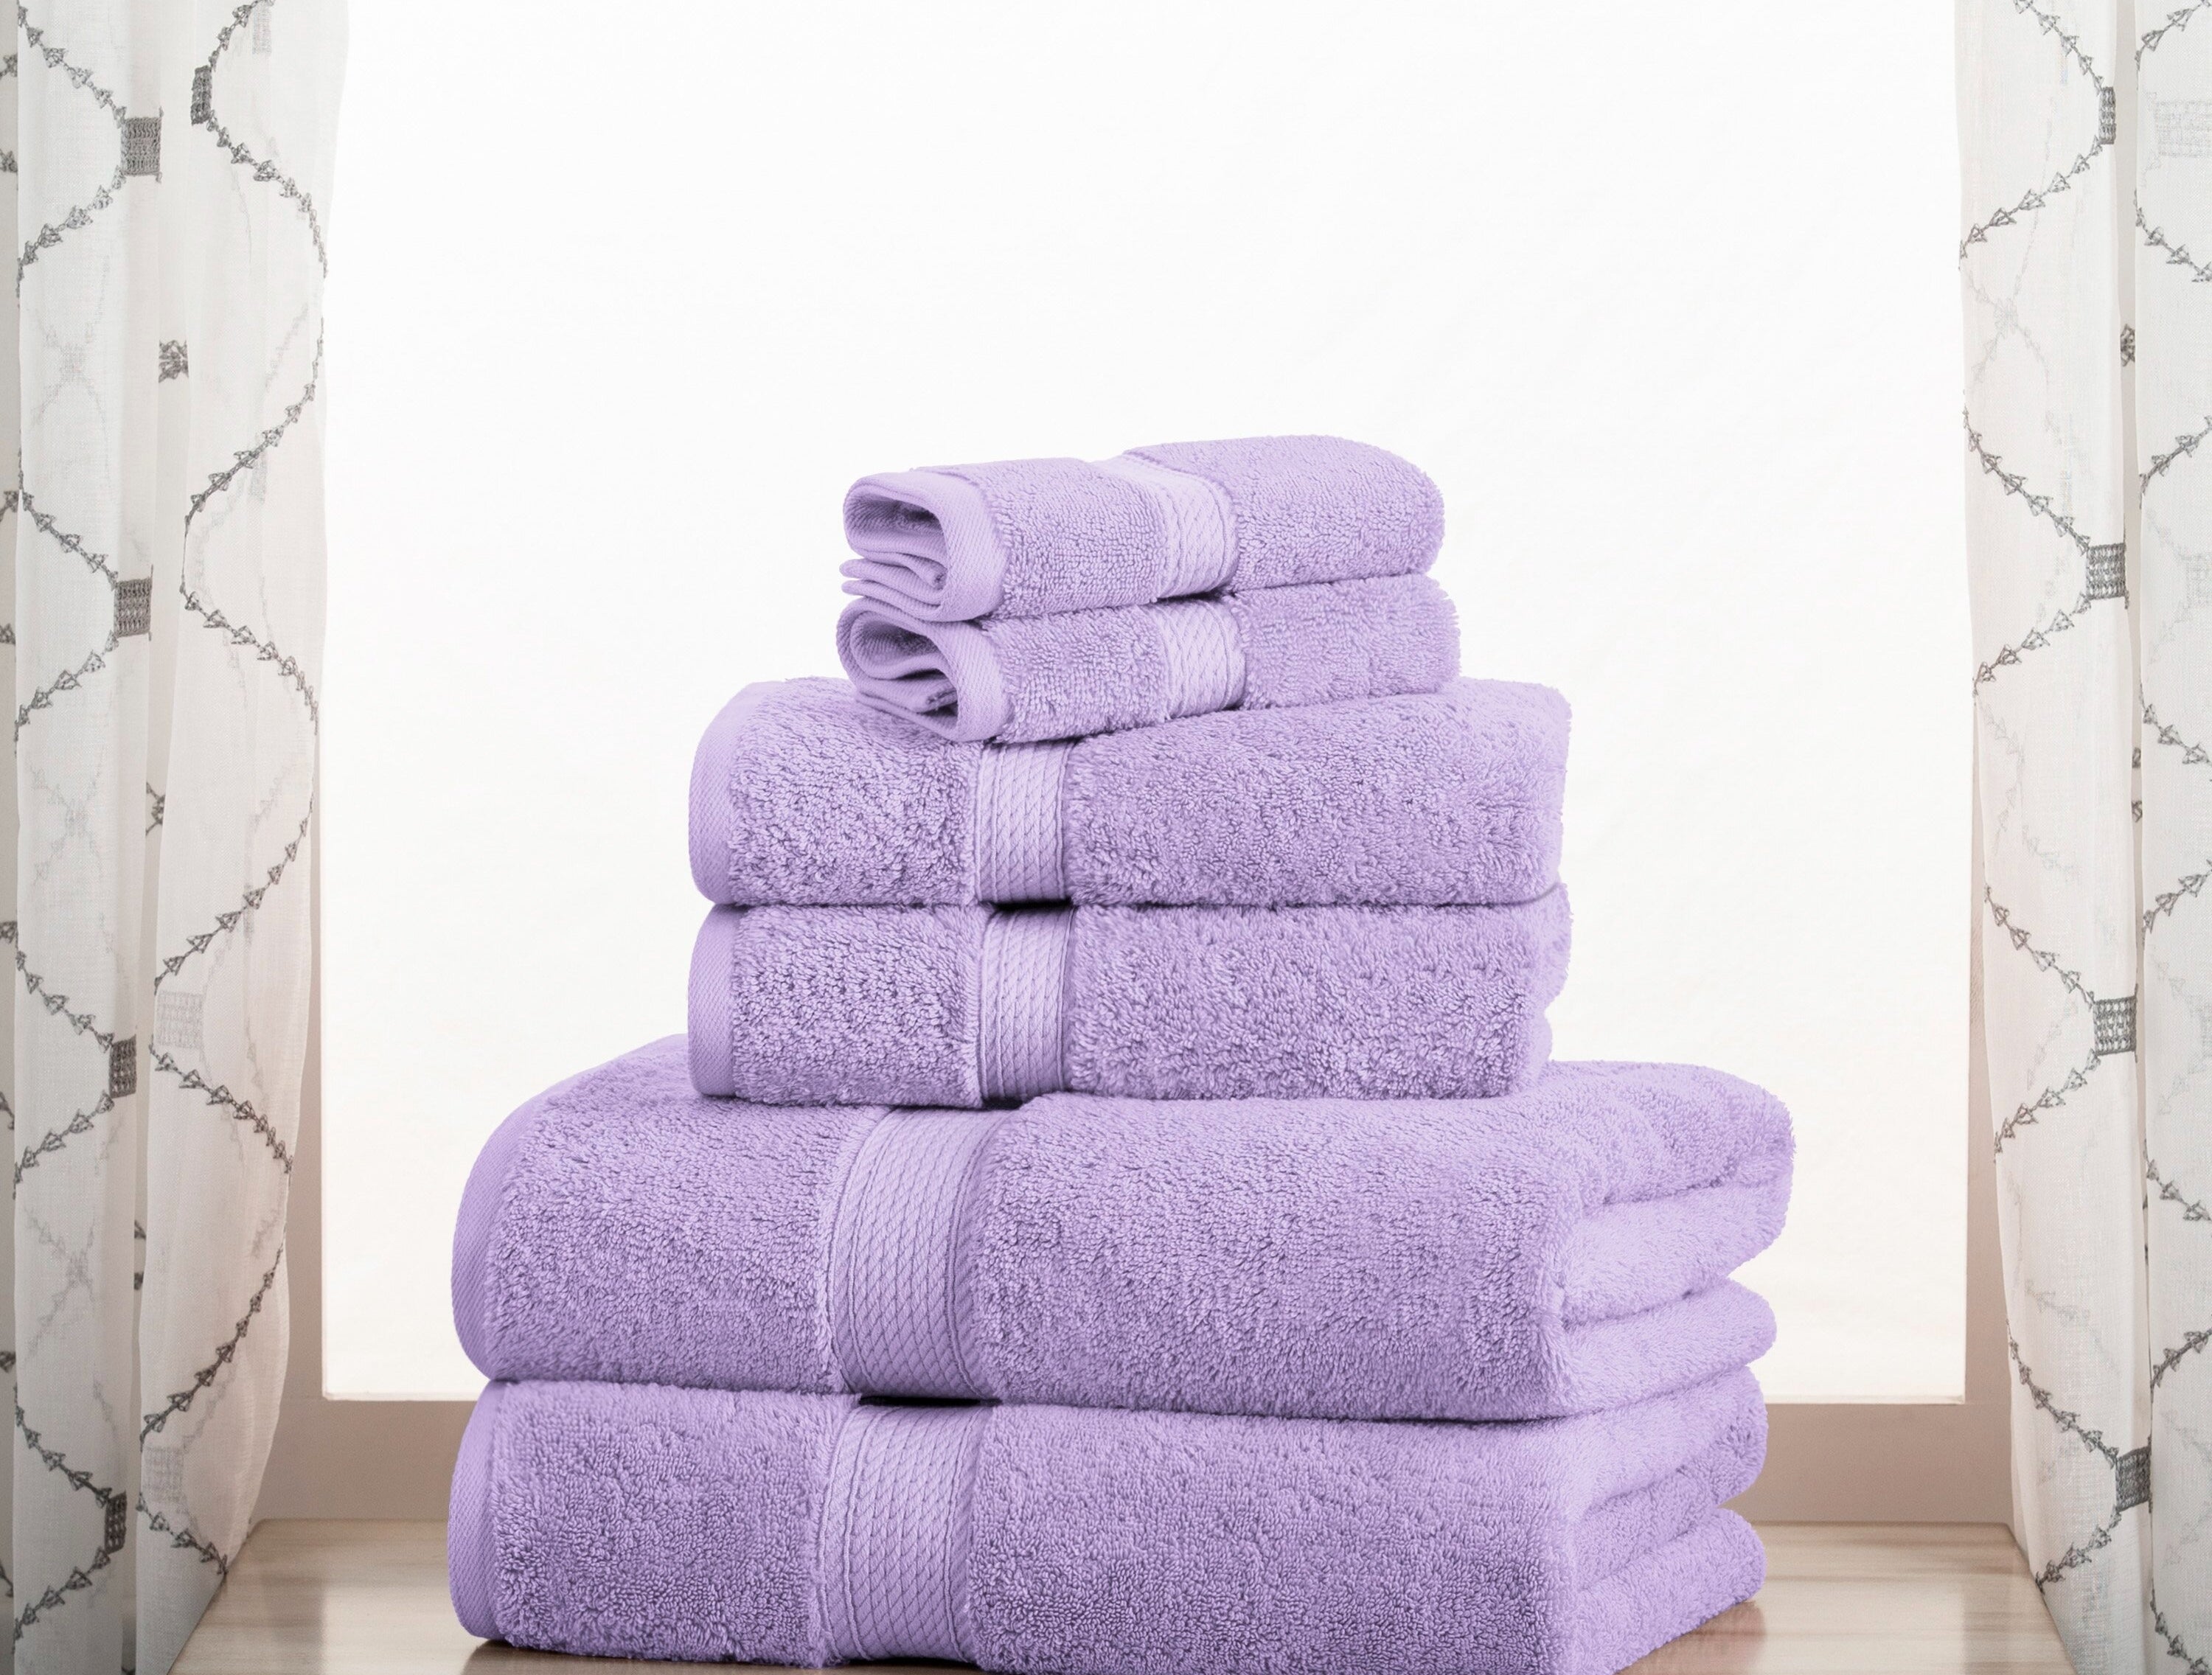 the purple towels